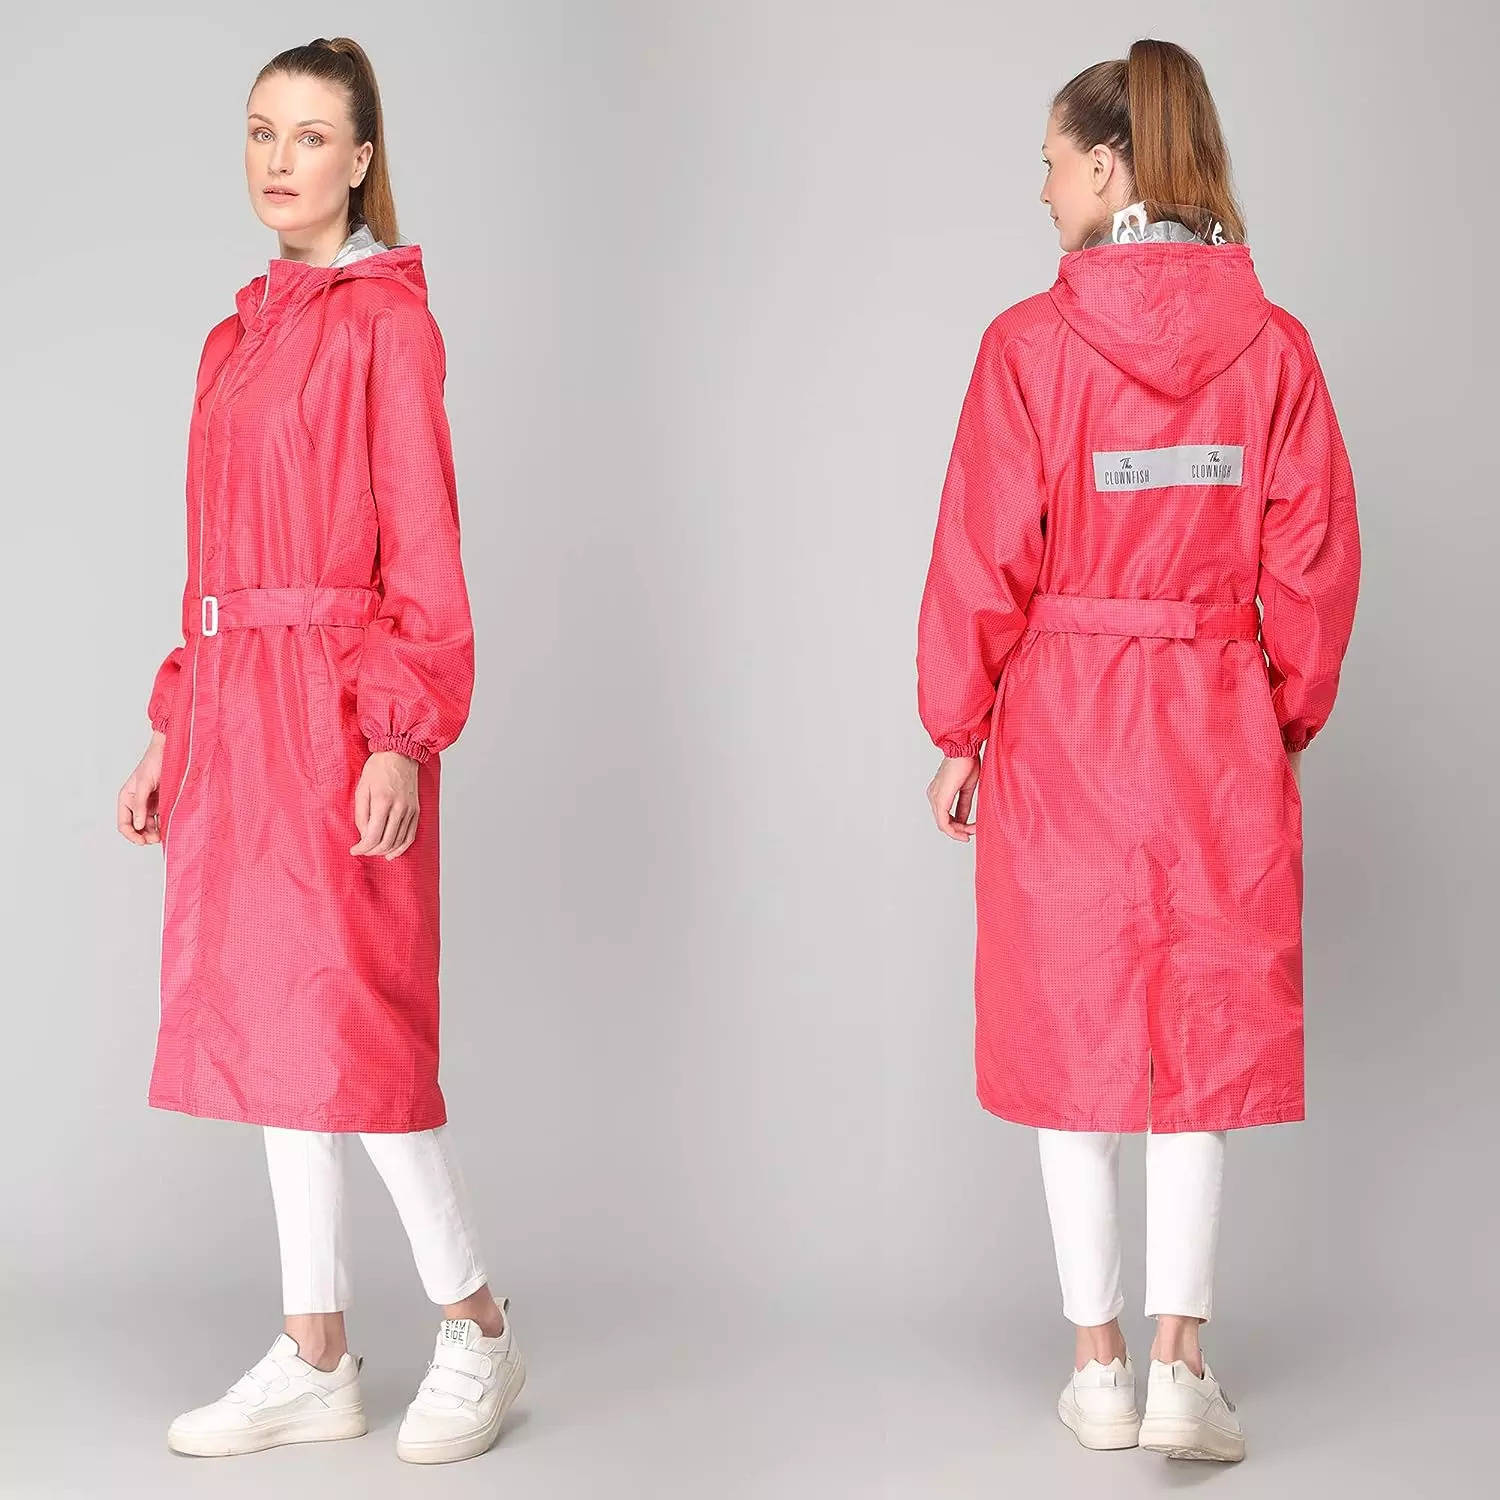 Women's Rain Coats, Explore our New Arrivals